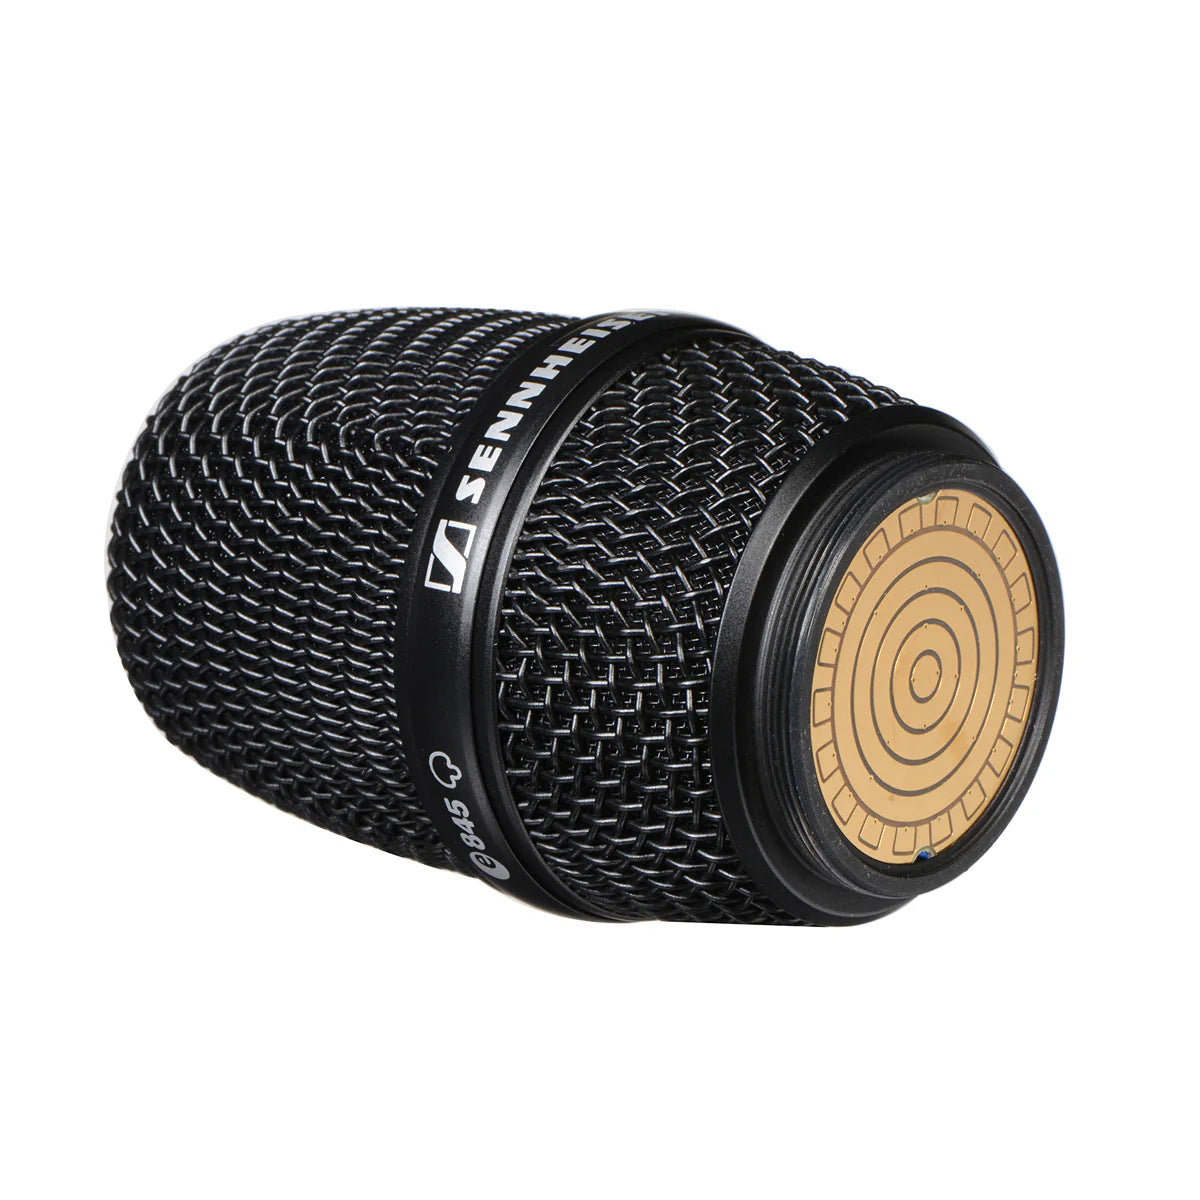 Sennheiser MMD 845-1 BK Microphone Capsule